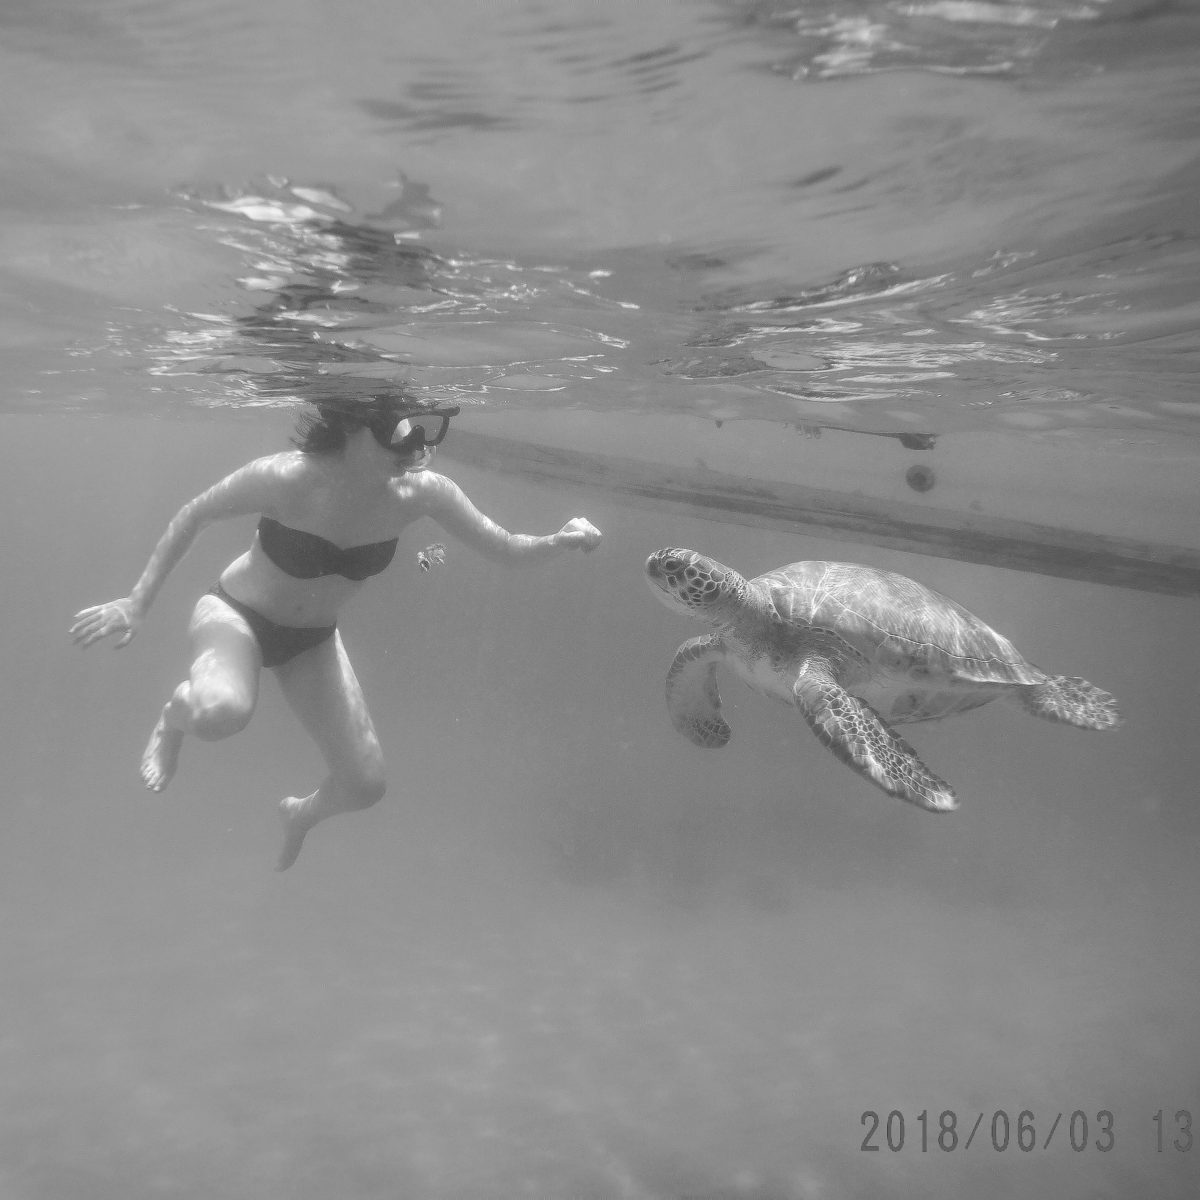 Barbados Snorkeling with Turtles